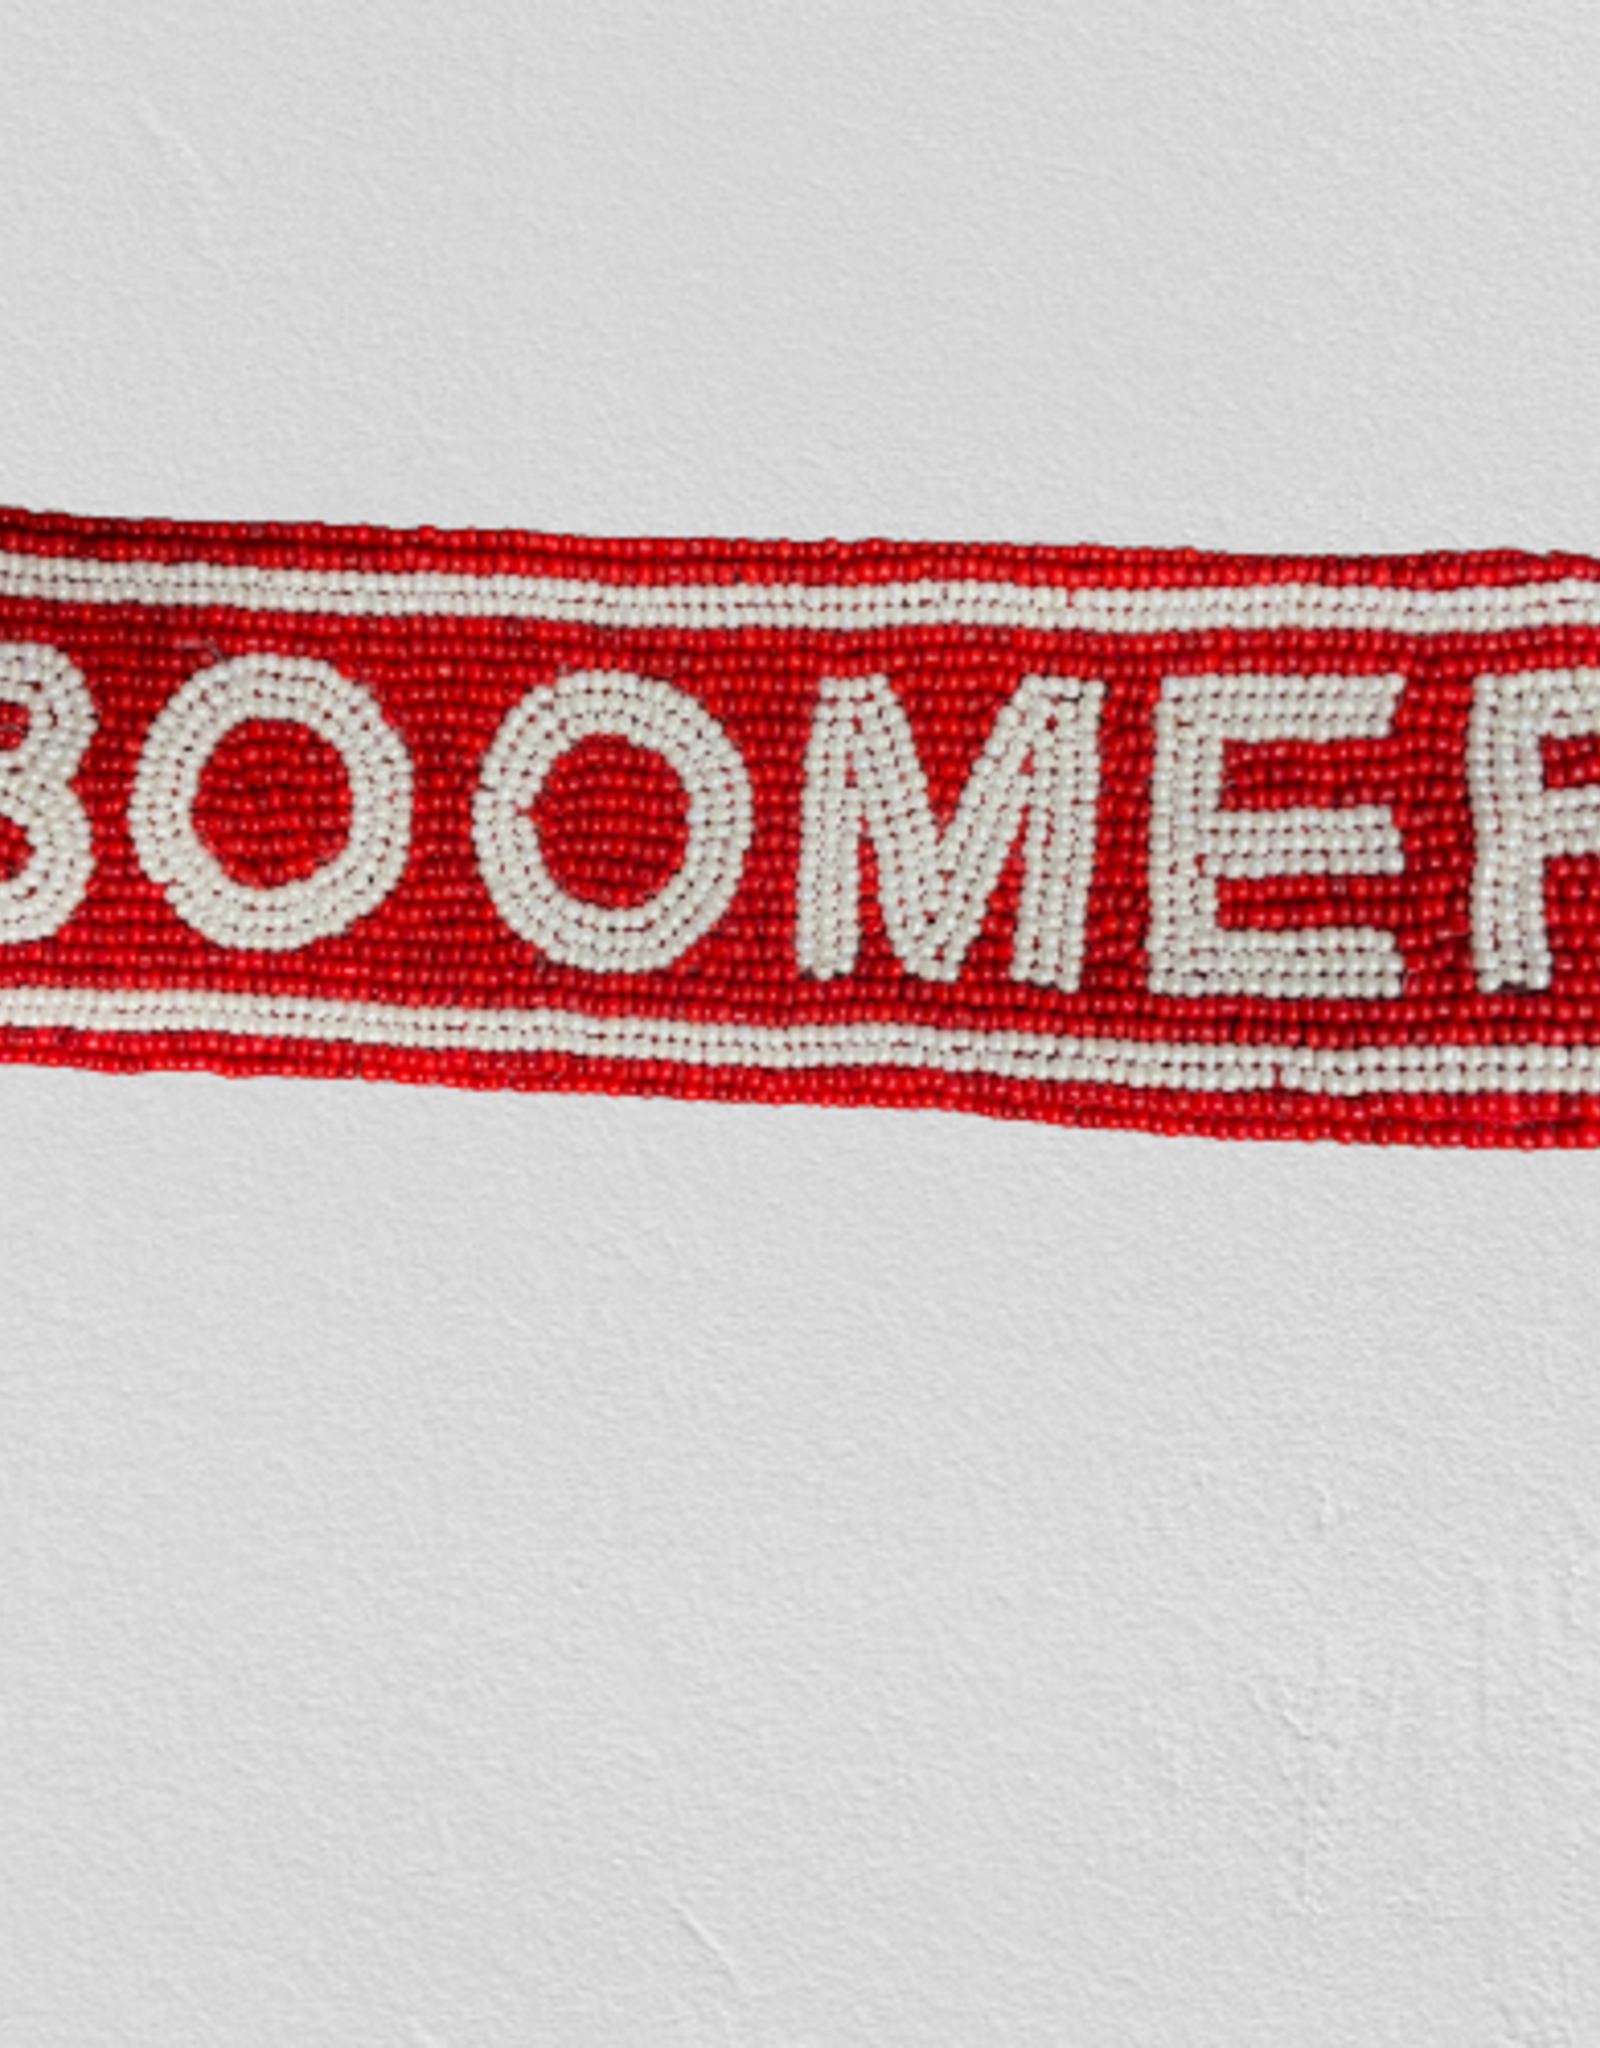 Desden Boomer Sooner Beaded Purse Strap 2 1/8" Wide